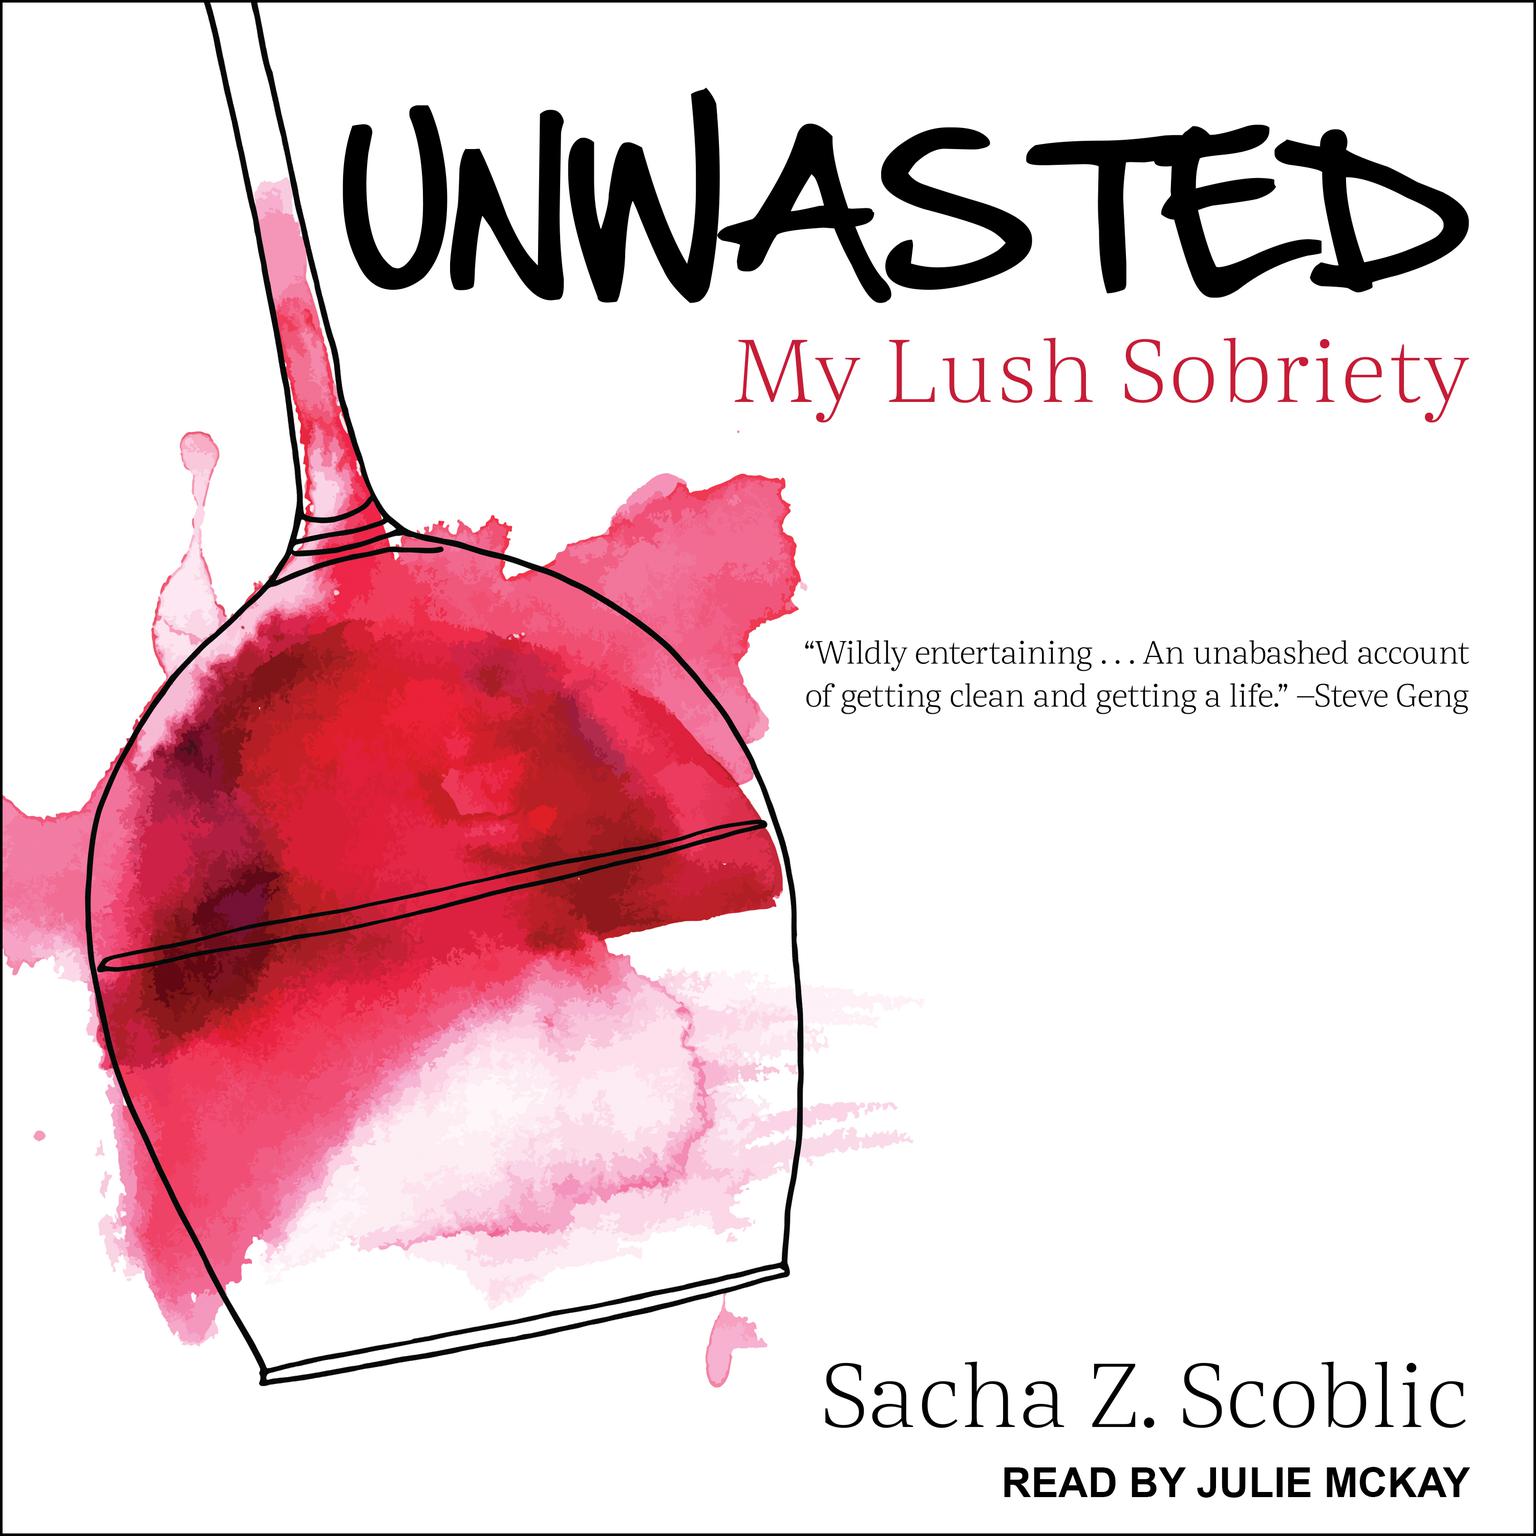 Unwasted: My Lush Sobriety Audiobook, by Sacha Z. Scoblic